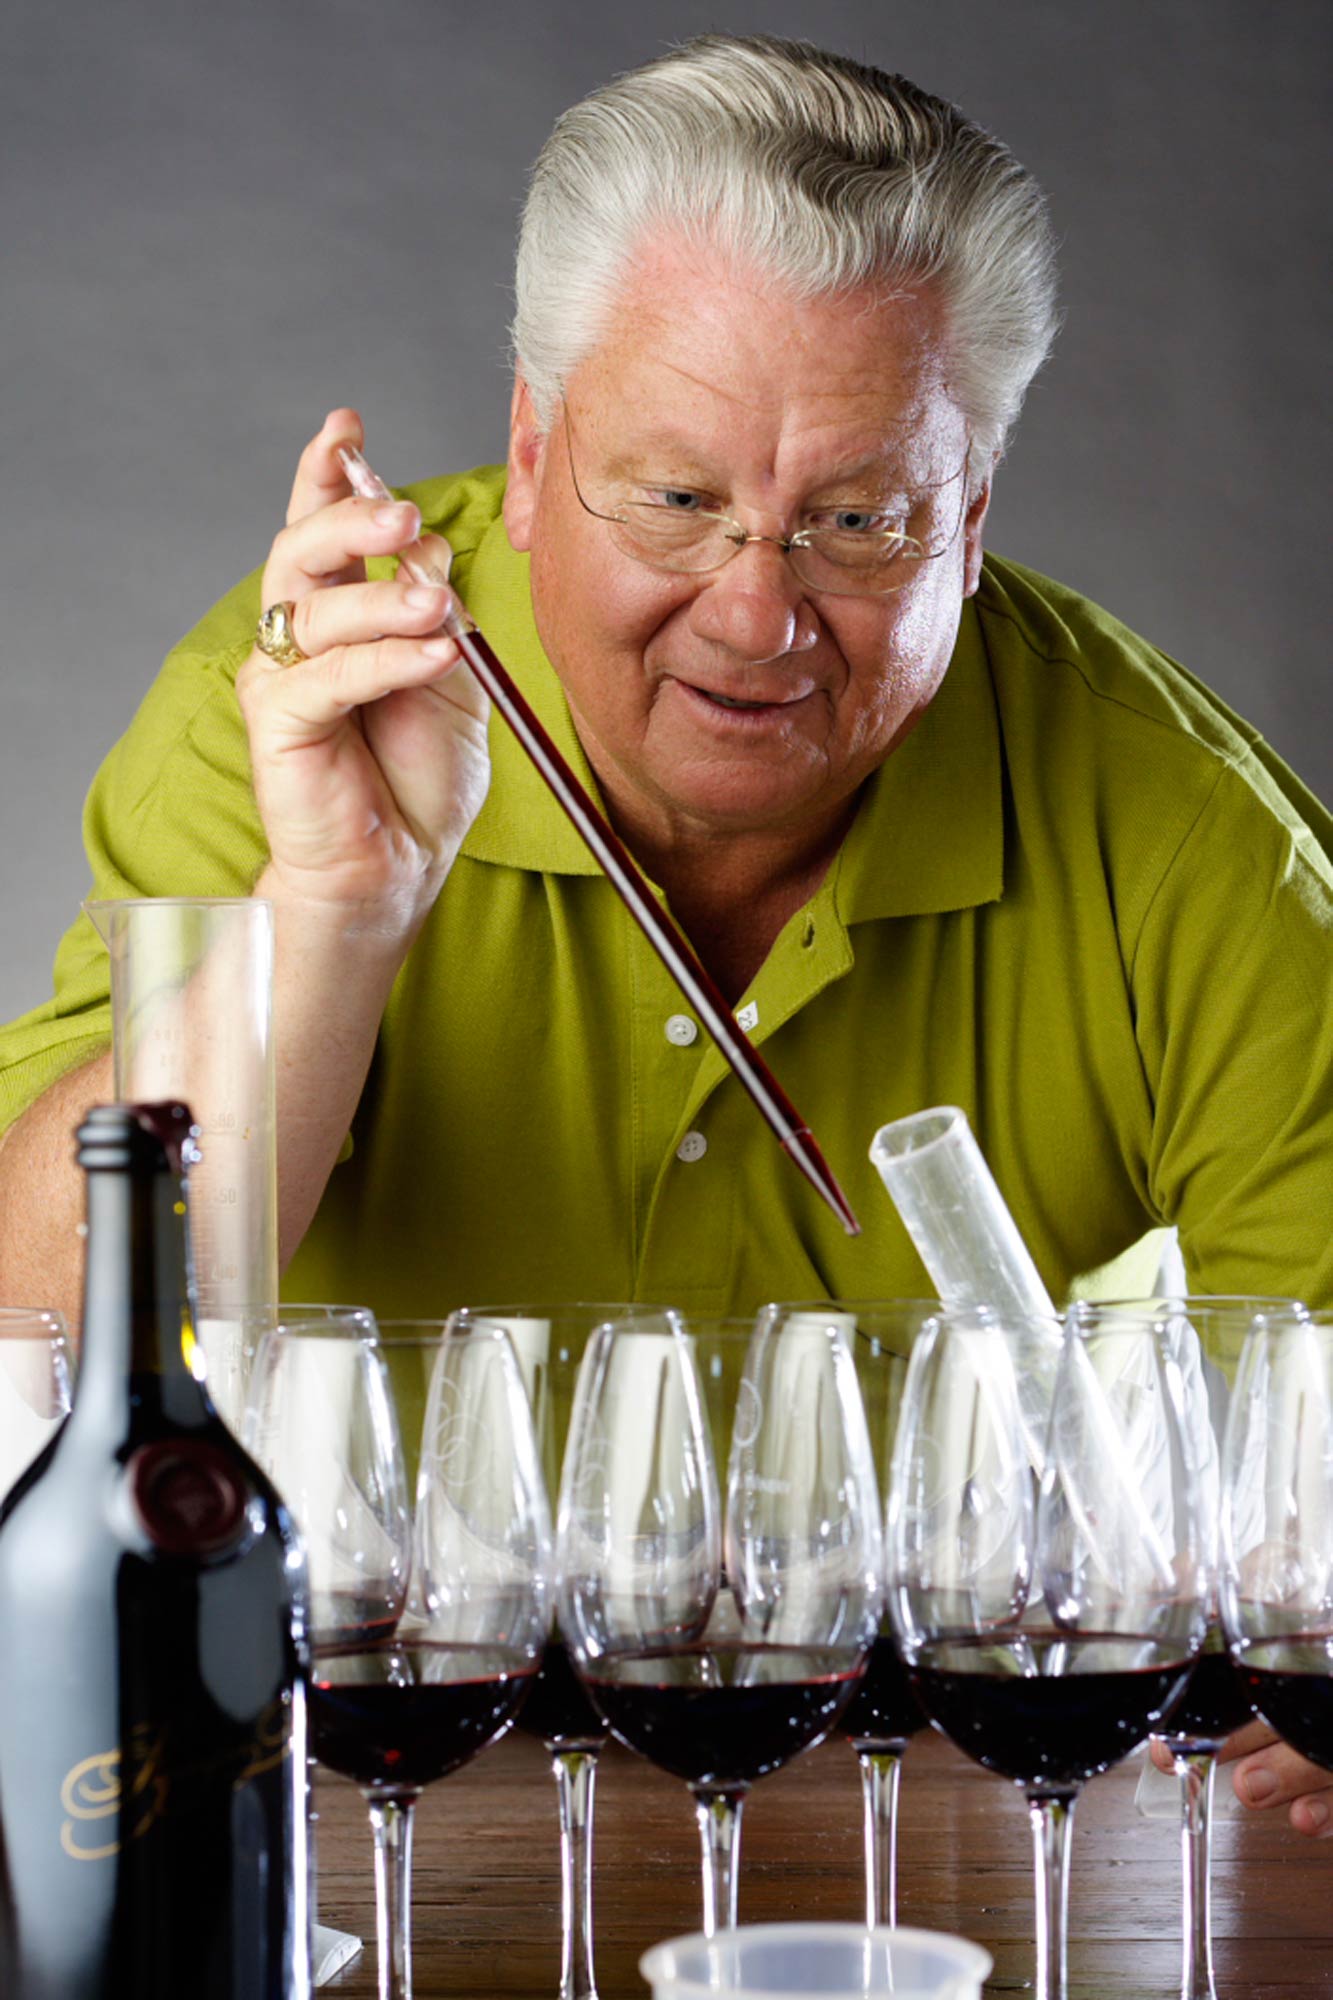 Wine Maker Portrait in lab